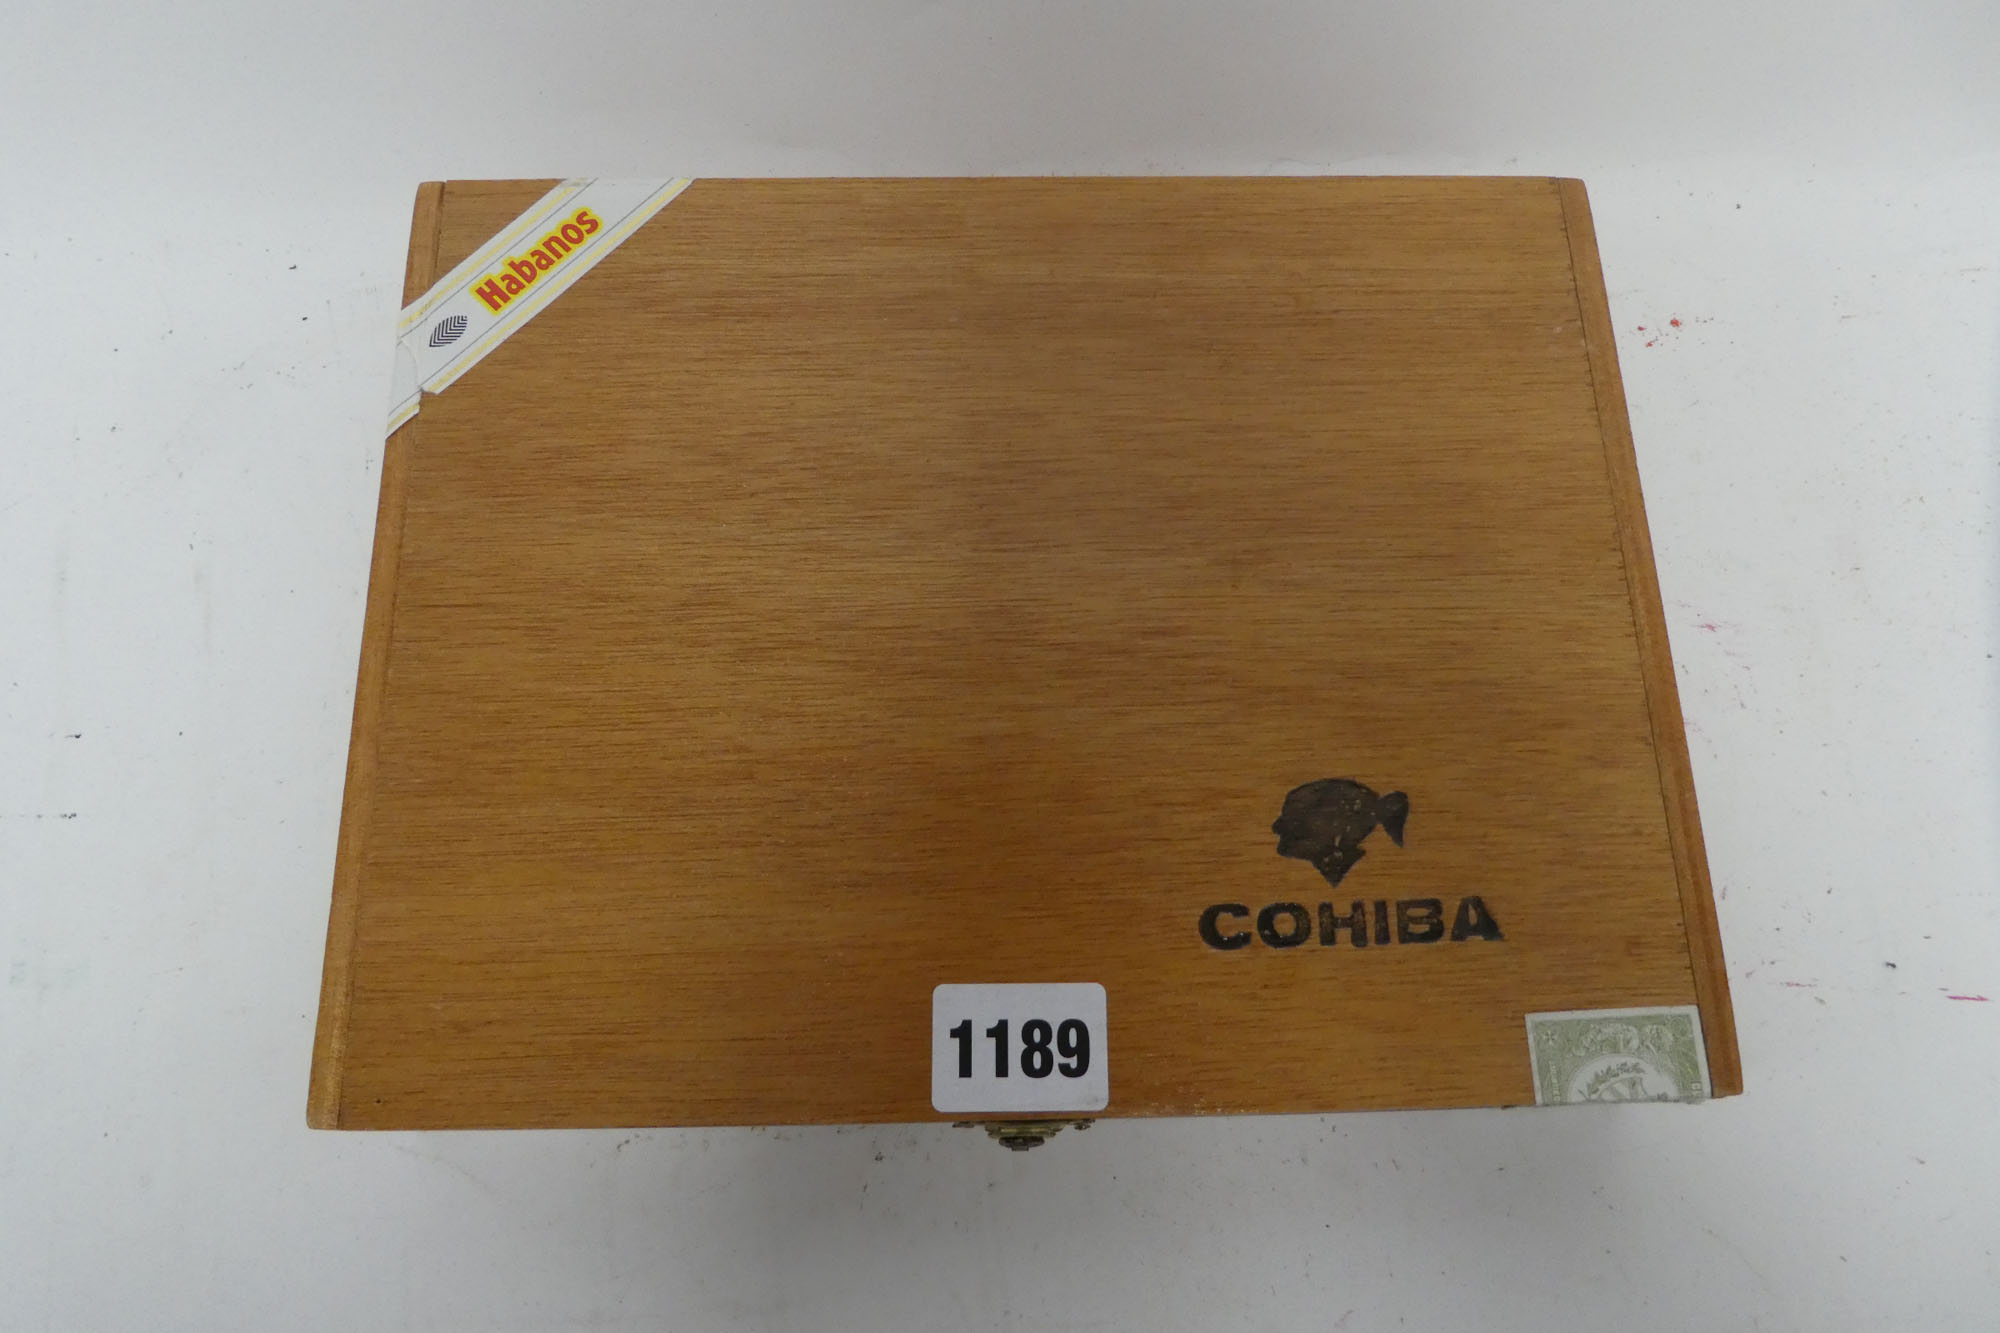 An old box of 24 Esplendidos Cohiba Habanos en Cuba (opened) - Image 2 of 2